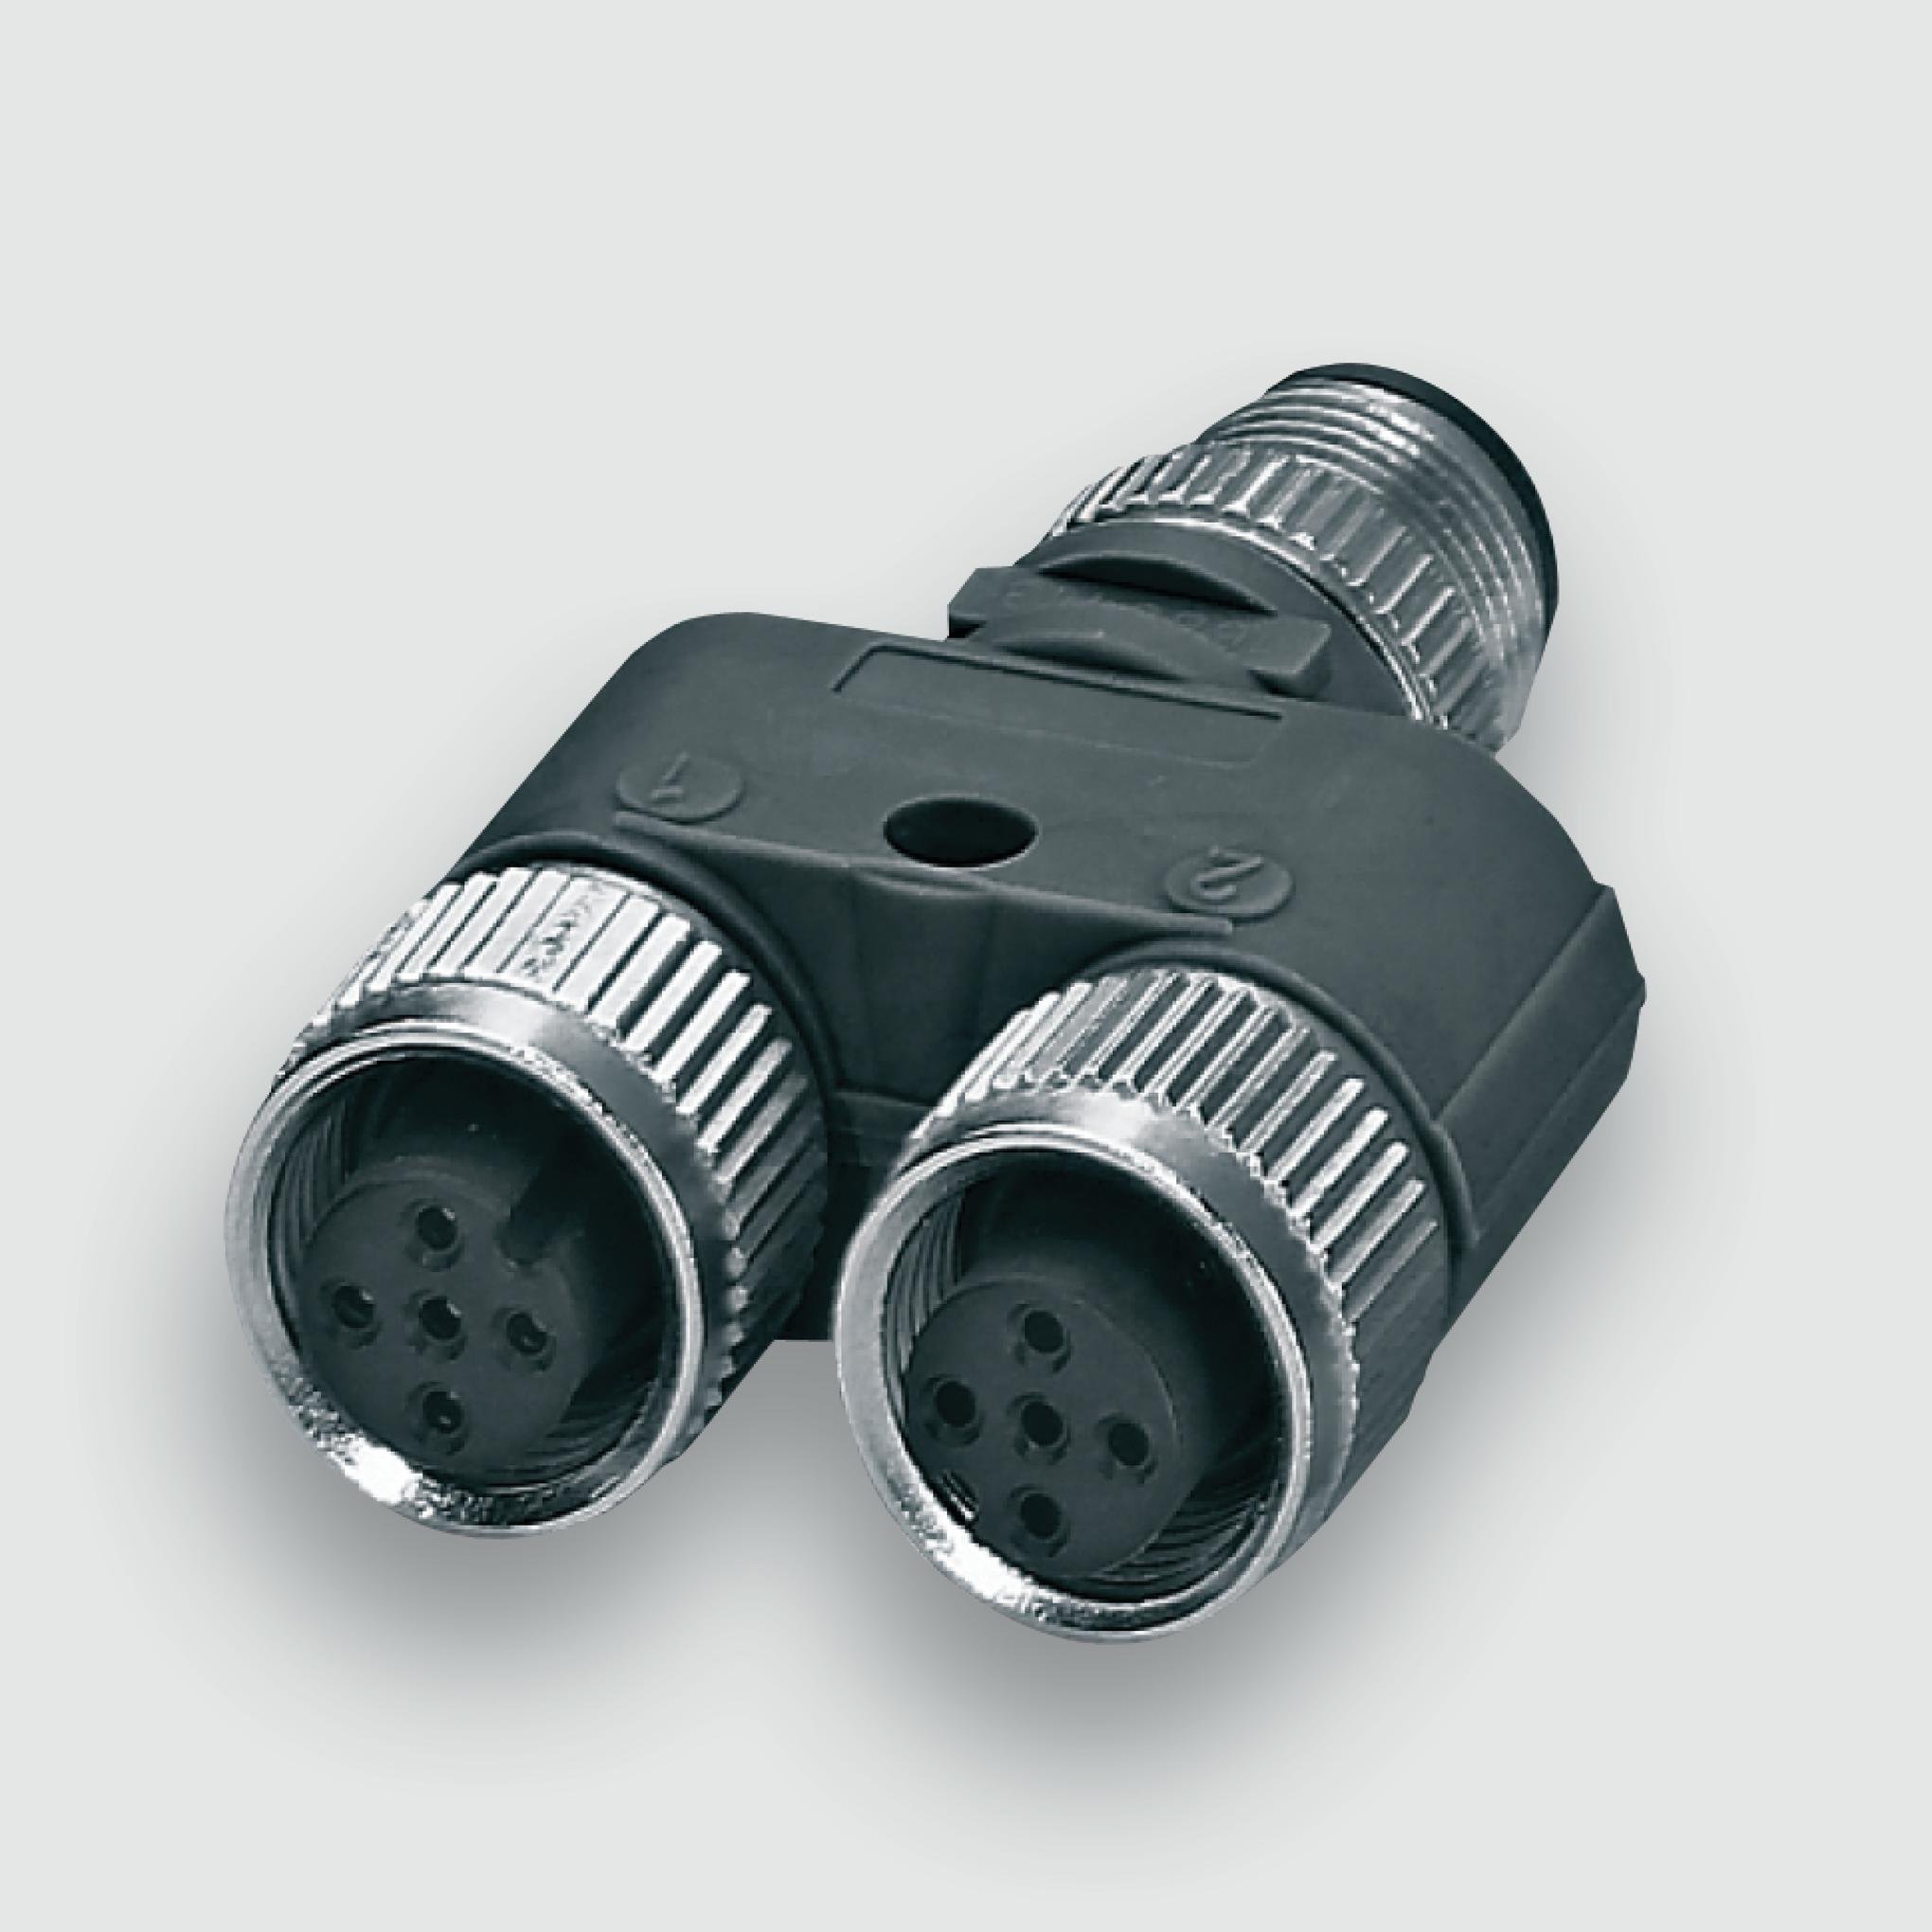 490026 - Actuator sensor interface - M12, M12/M8 -connector